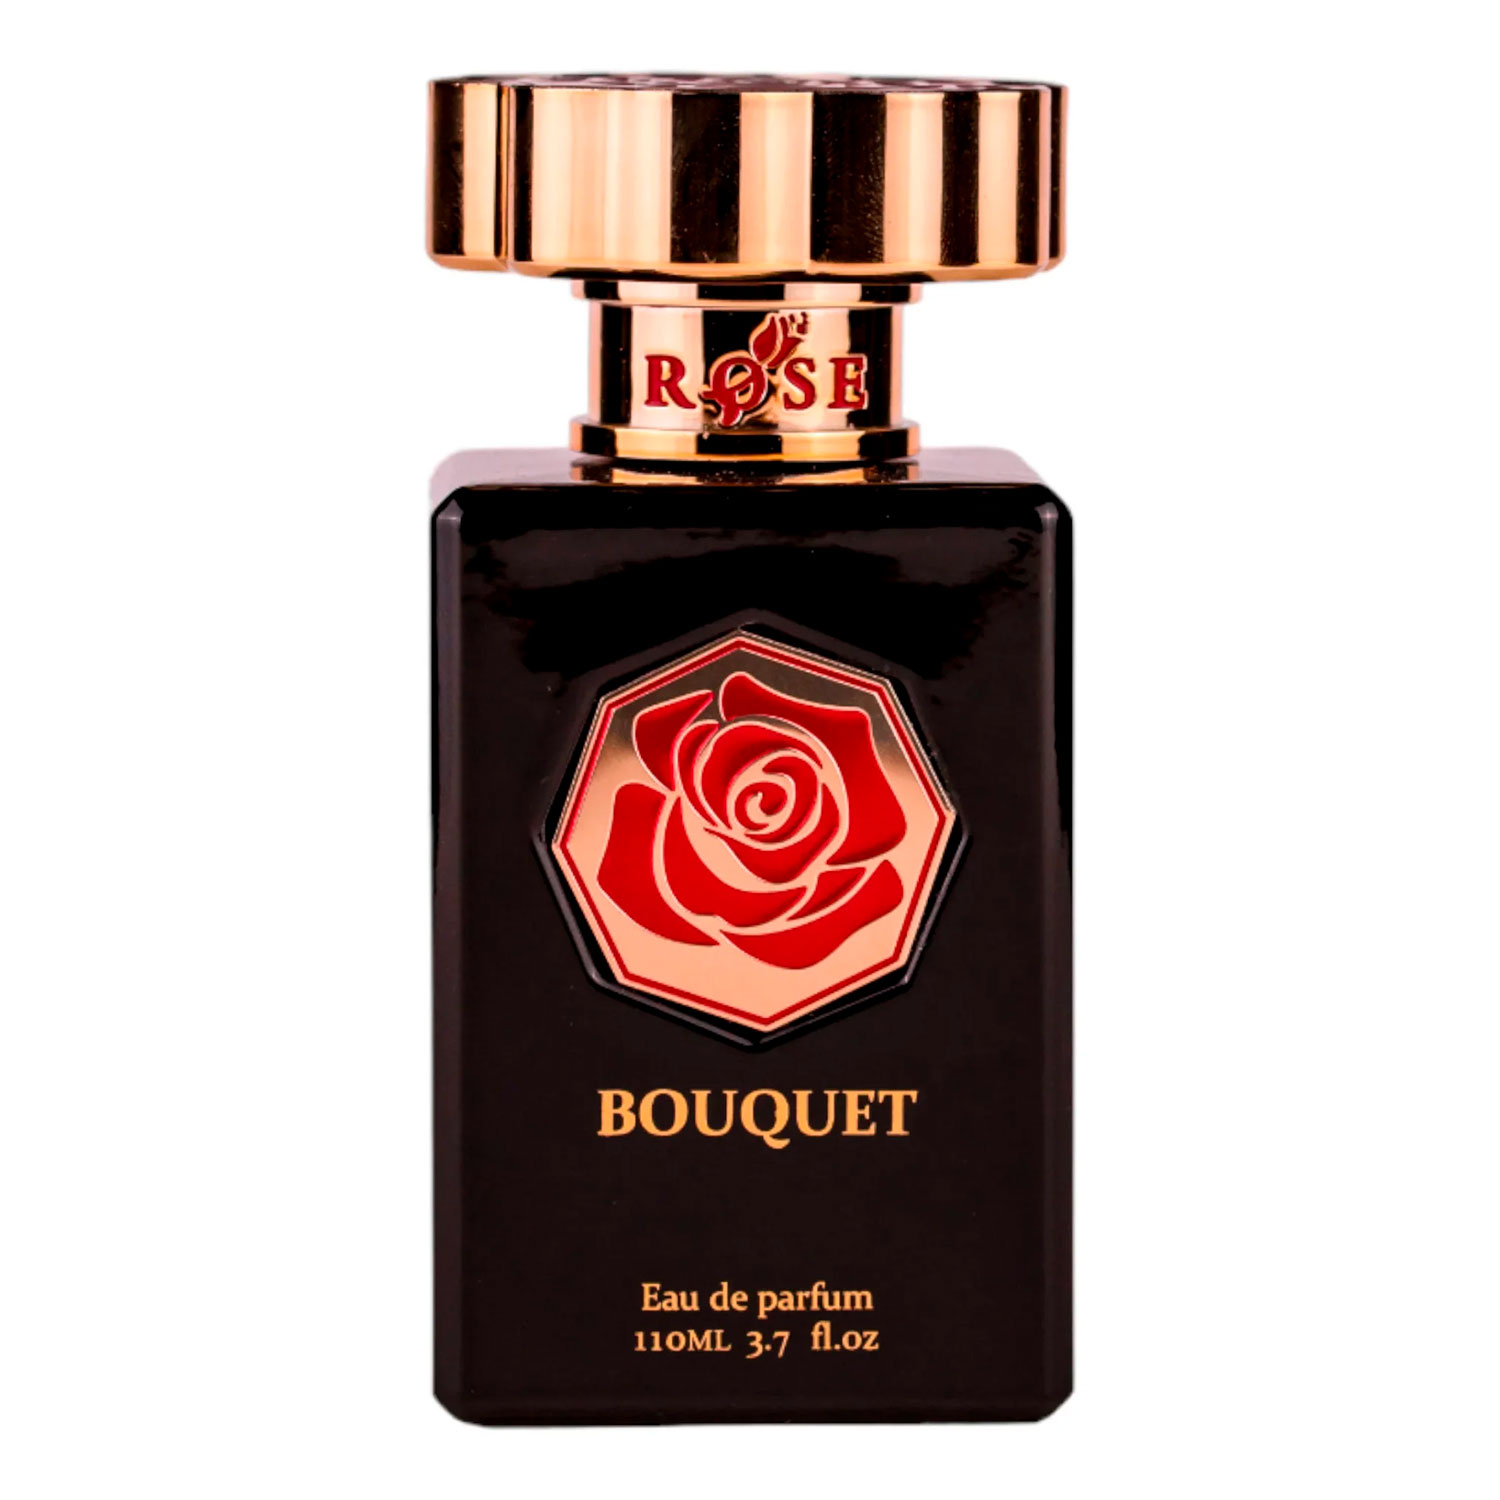 Perfume Maison Asrar Rose Bouquet Eau de Parfum Feminino 110ml